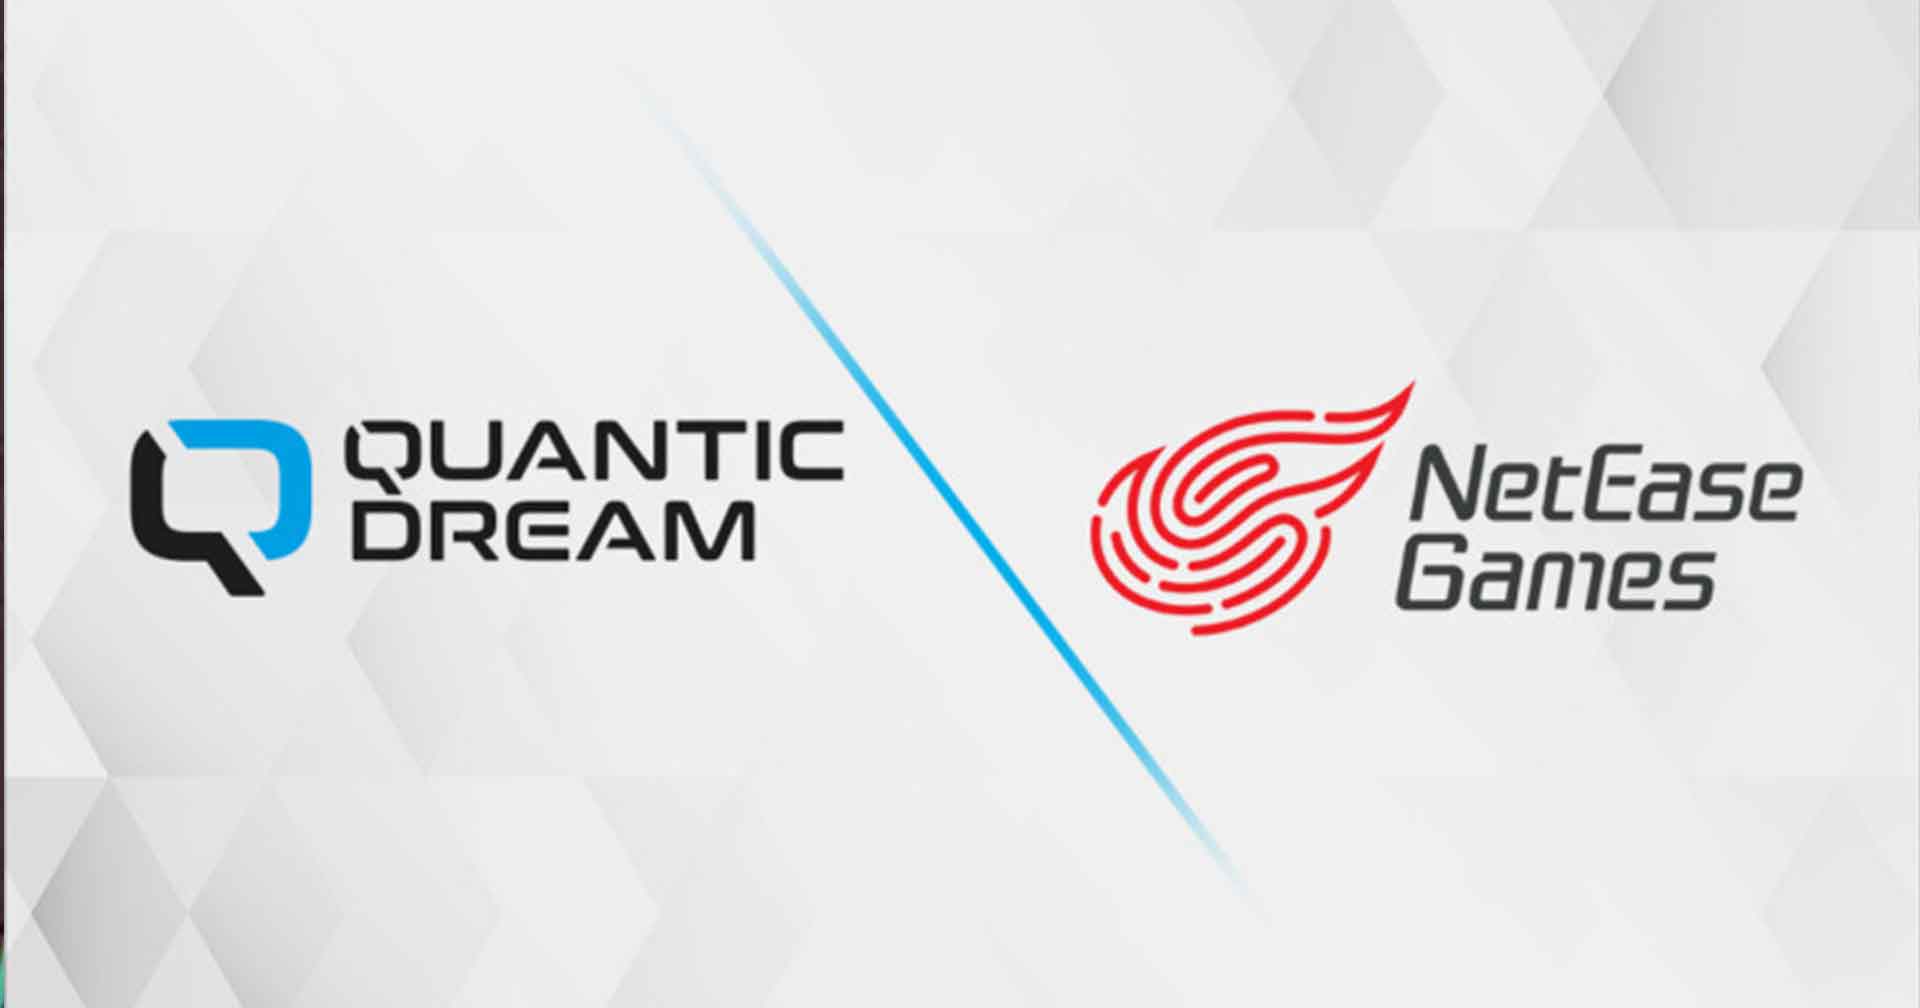 NetEase ค่ายเกมใหญ่ของจีน เข้าซื้อ Quantic Dream ทีมผู้พัฒนา Detroit Become Human